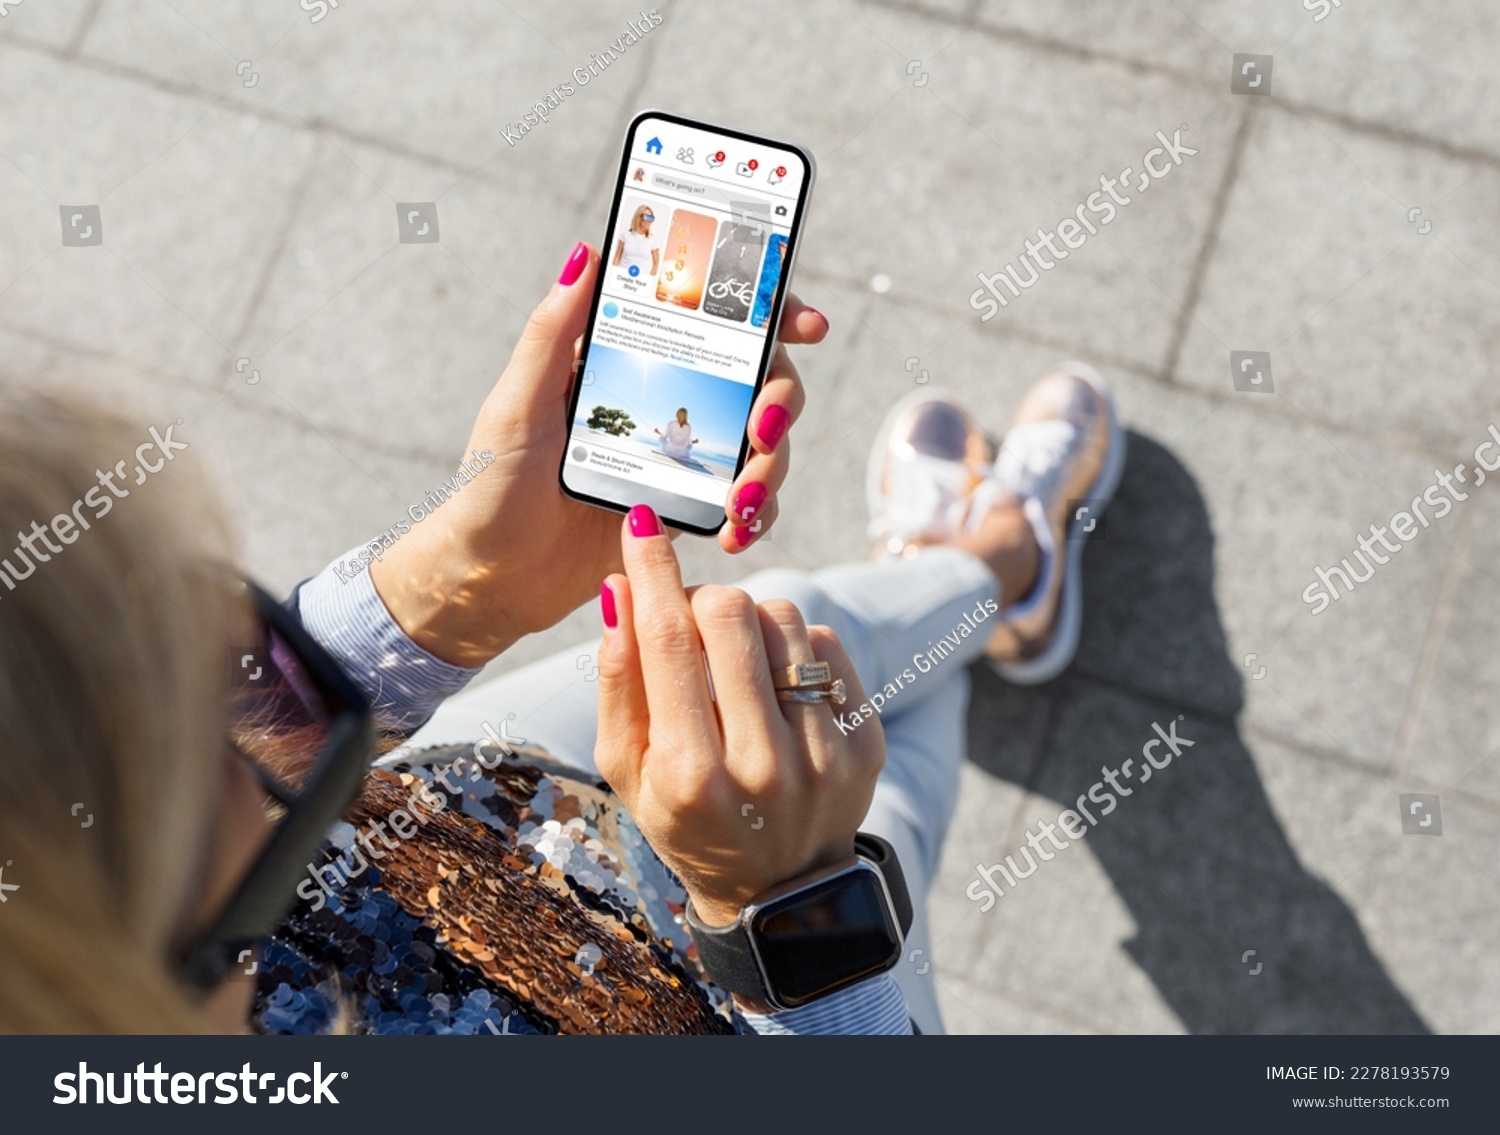 Woman using social media app on mobile phone #2278193579